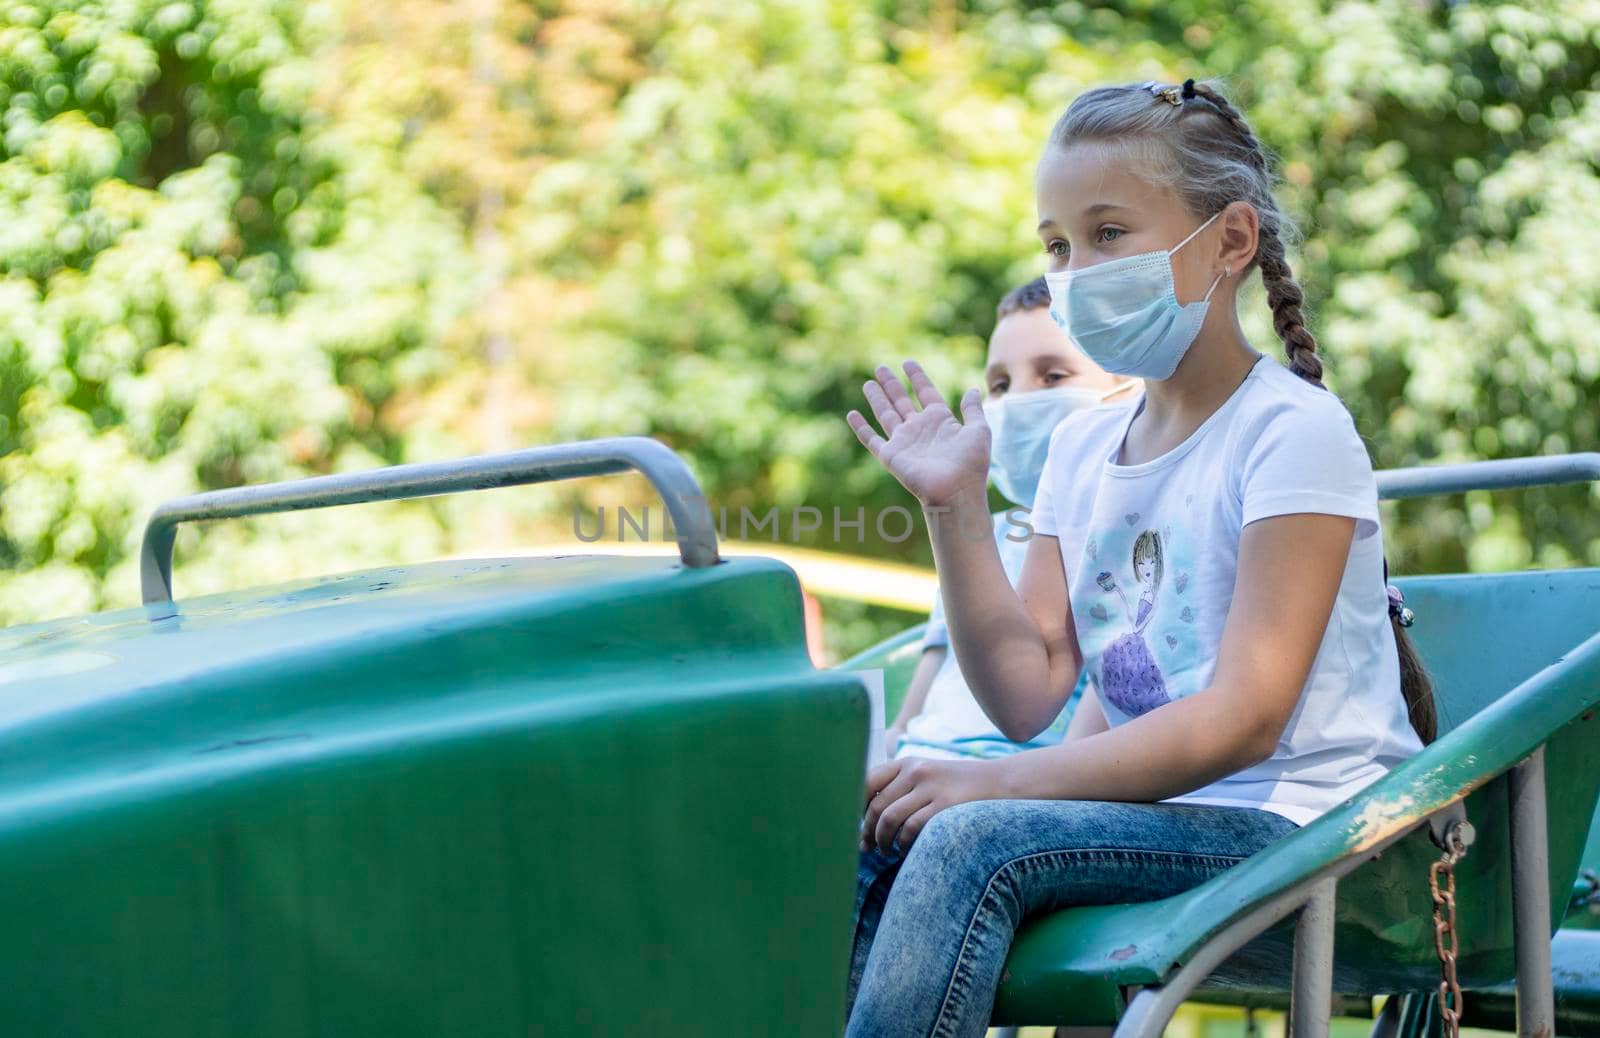 children in medical masks ride an attraction train